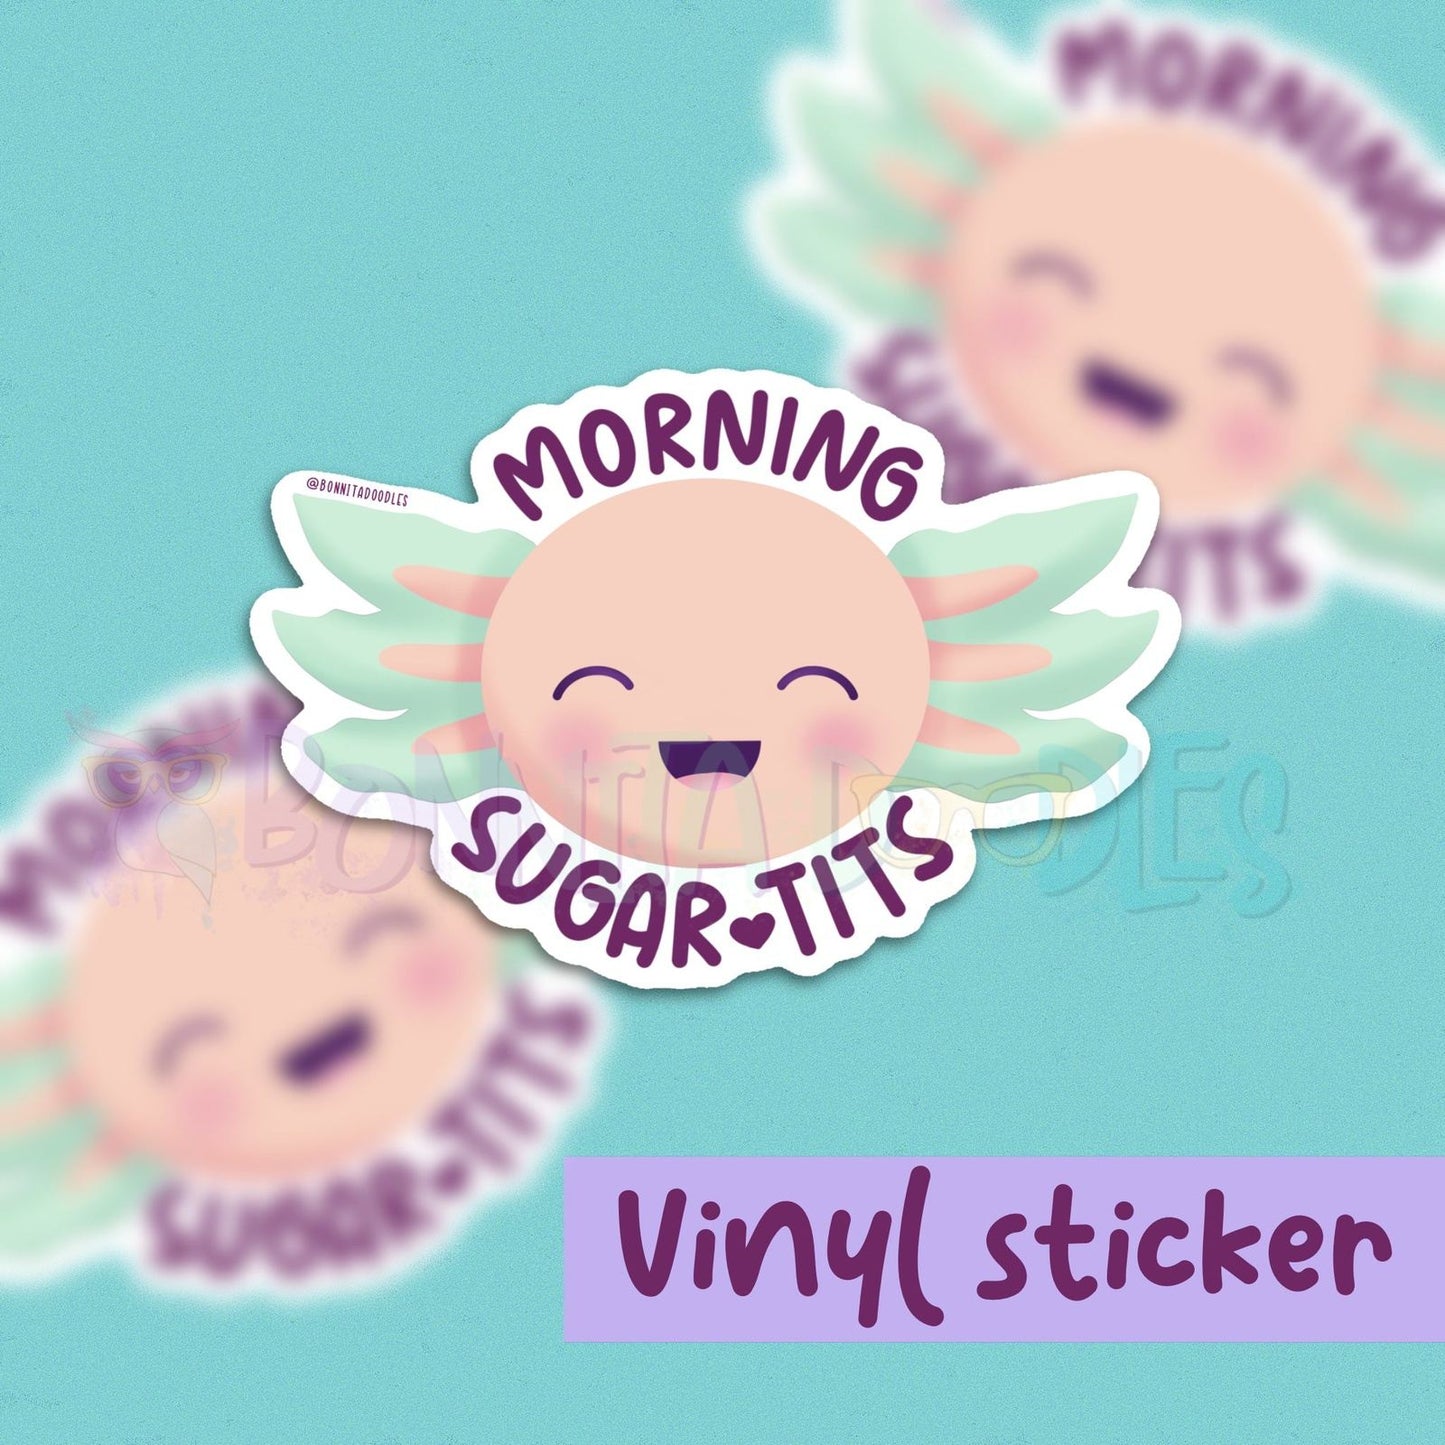 Sweary sticker - sugar axolotl - adult humour